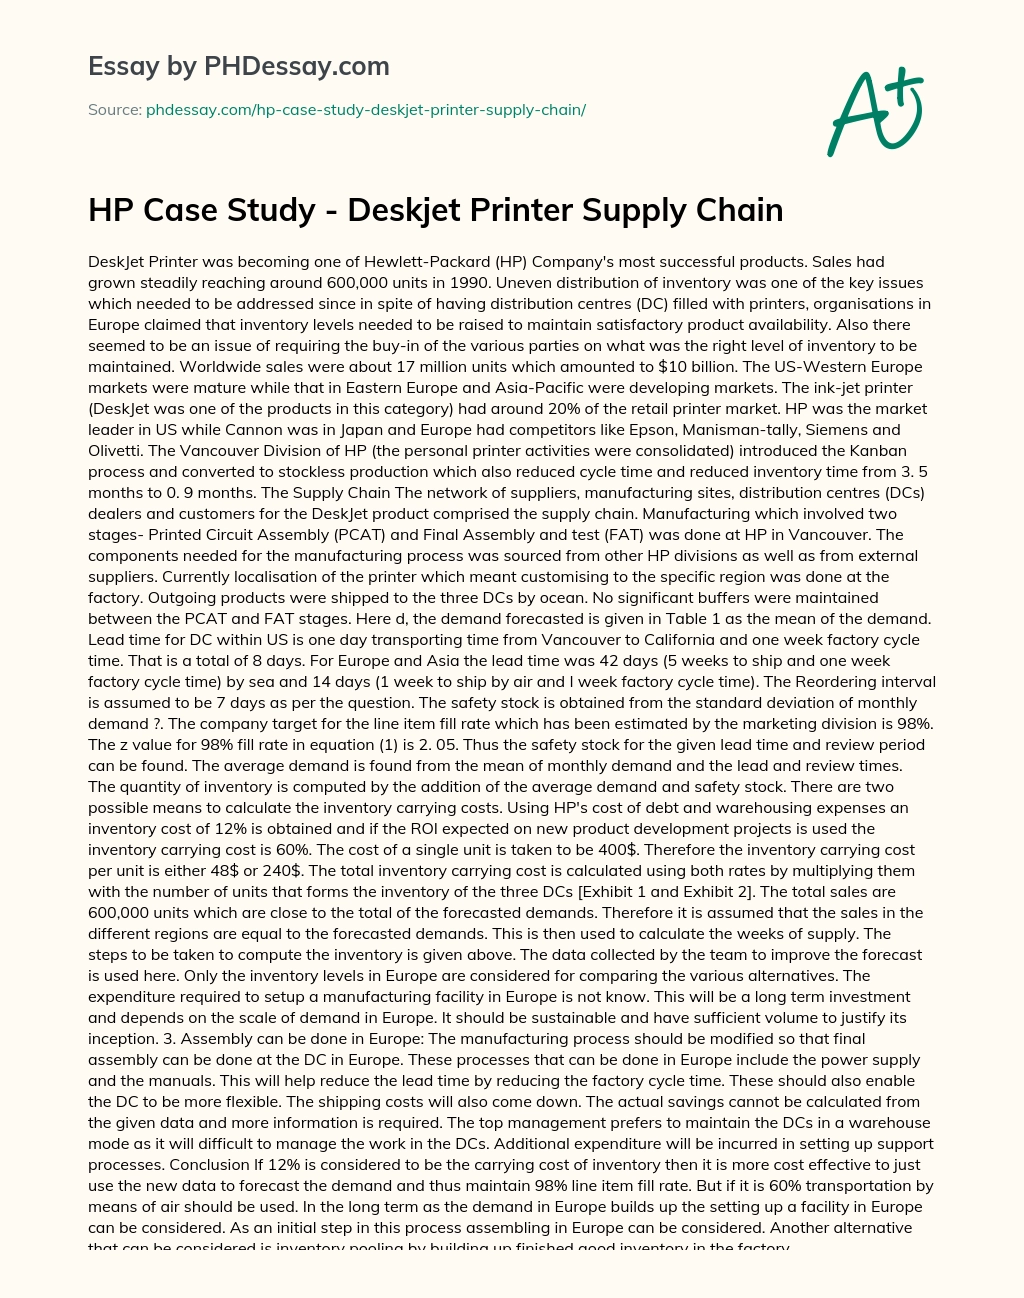 HP Case Study – Deskjet Printer Supply Chain essay